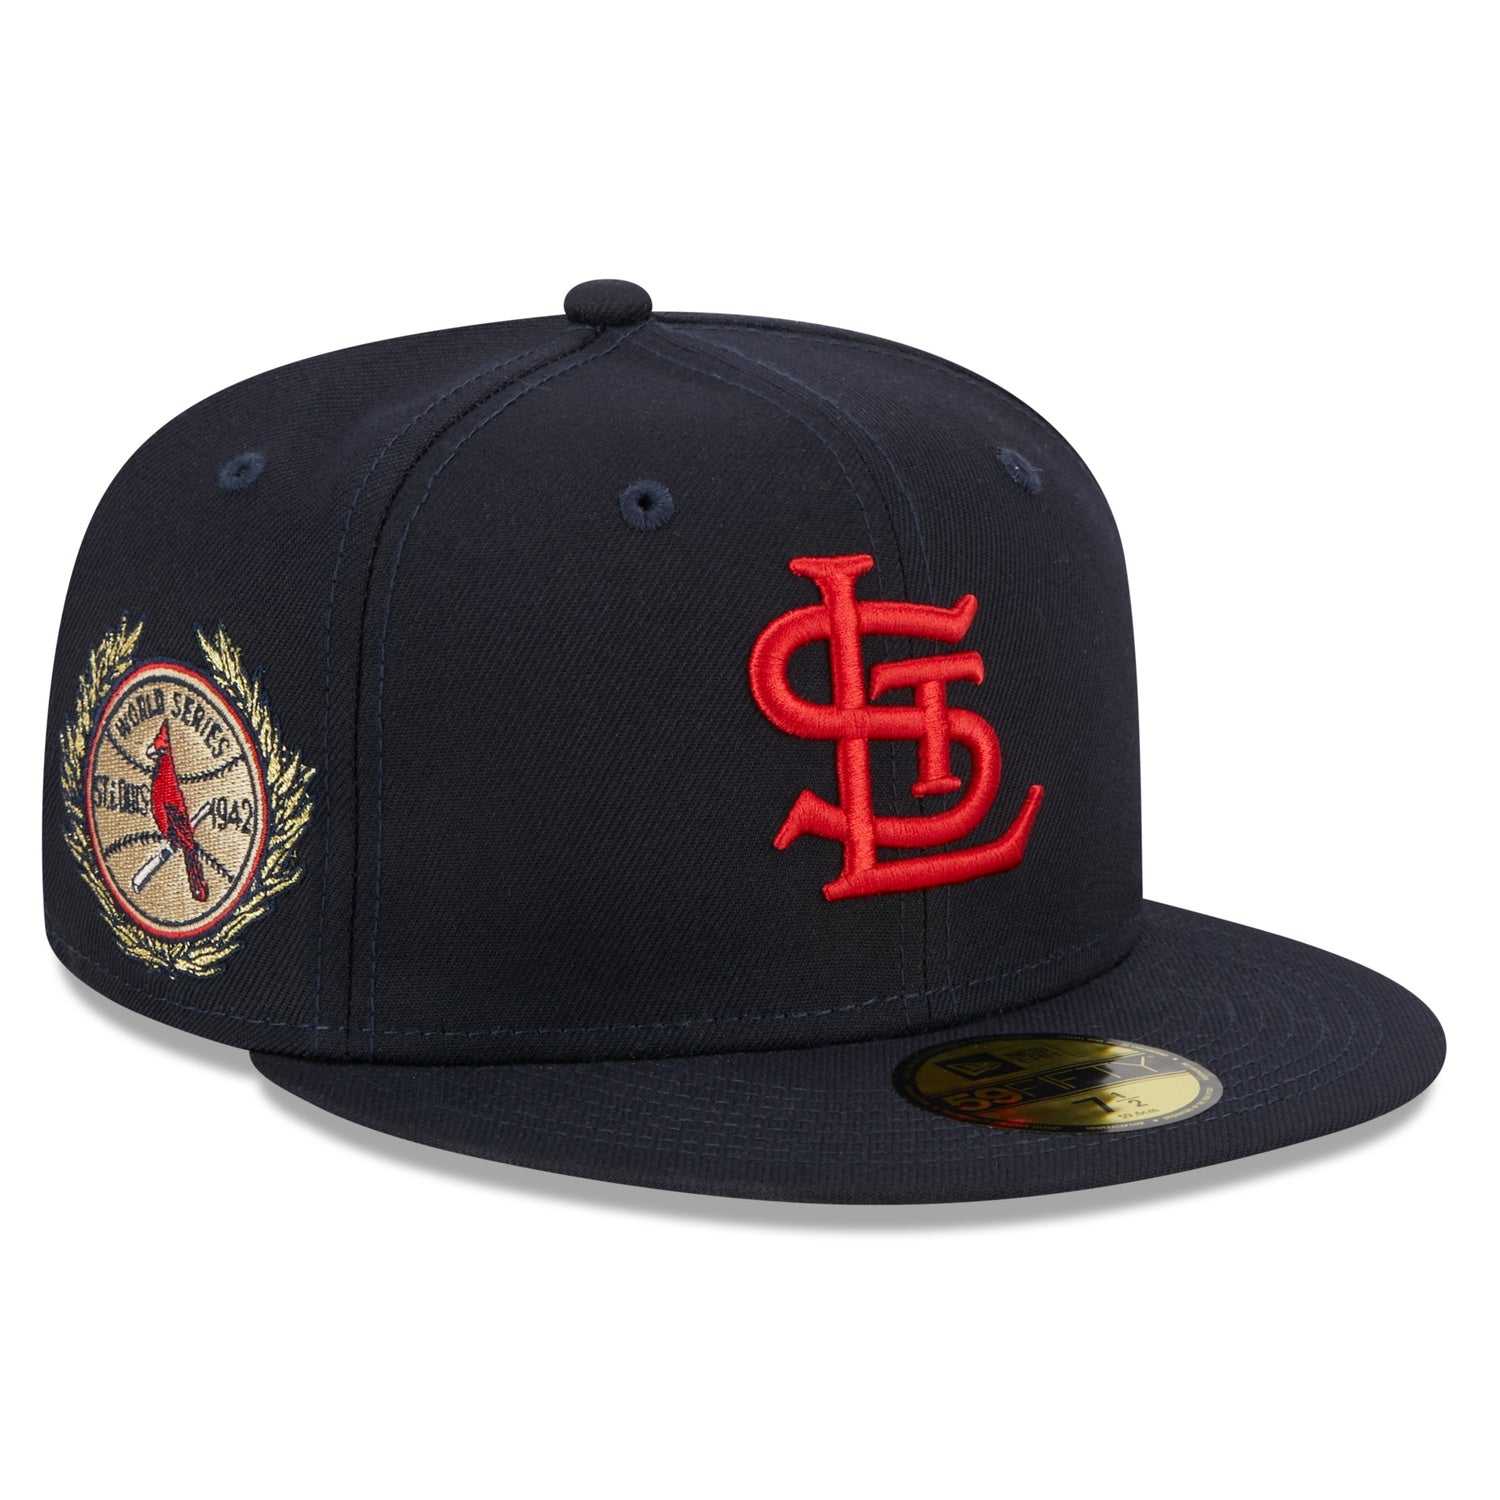 St. Louis Cardinals Fitted Hats  St. Louis Cardinals Baseball Caps